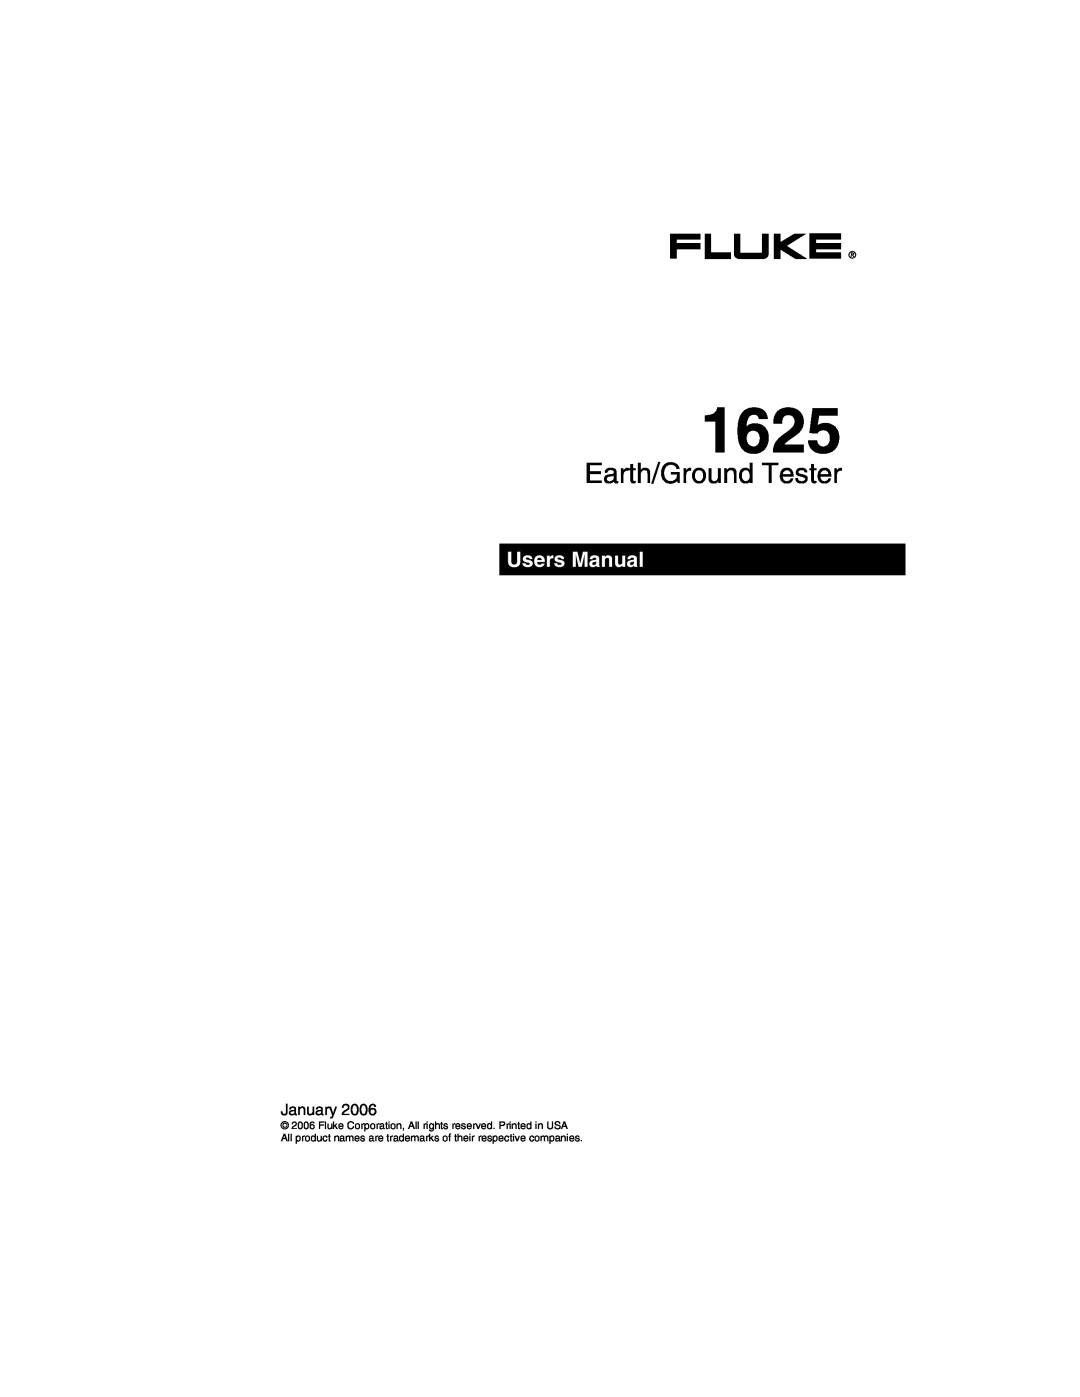 Fluke 1625 user manual Earth/Ground Tester, Users Manual 